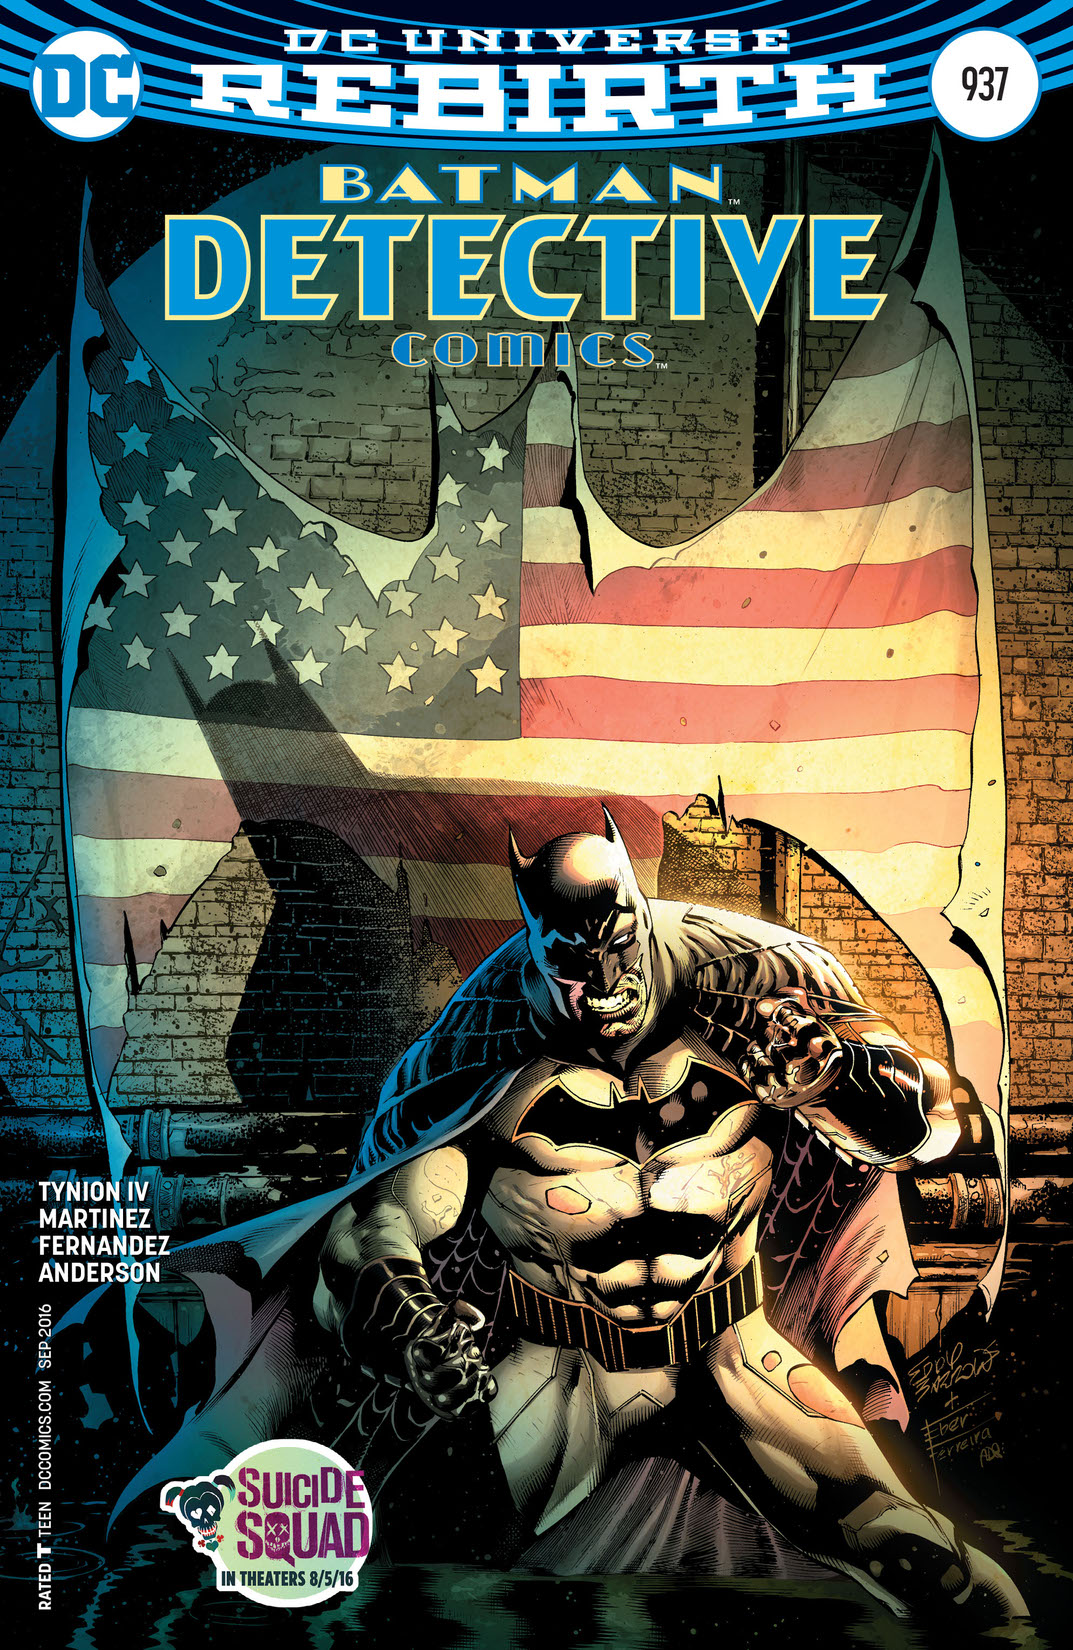 Detective Comics (2016-) #937 preview images